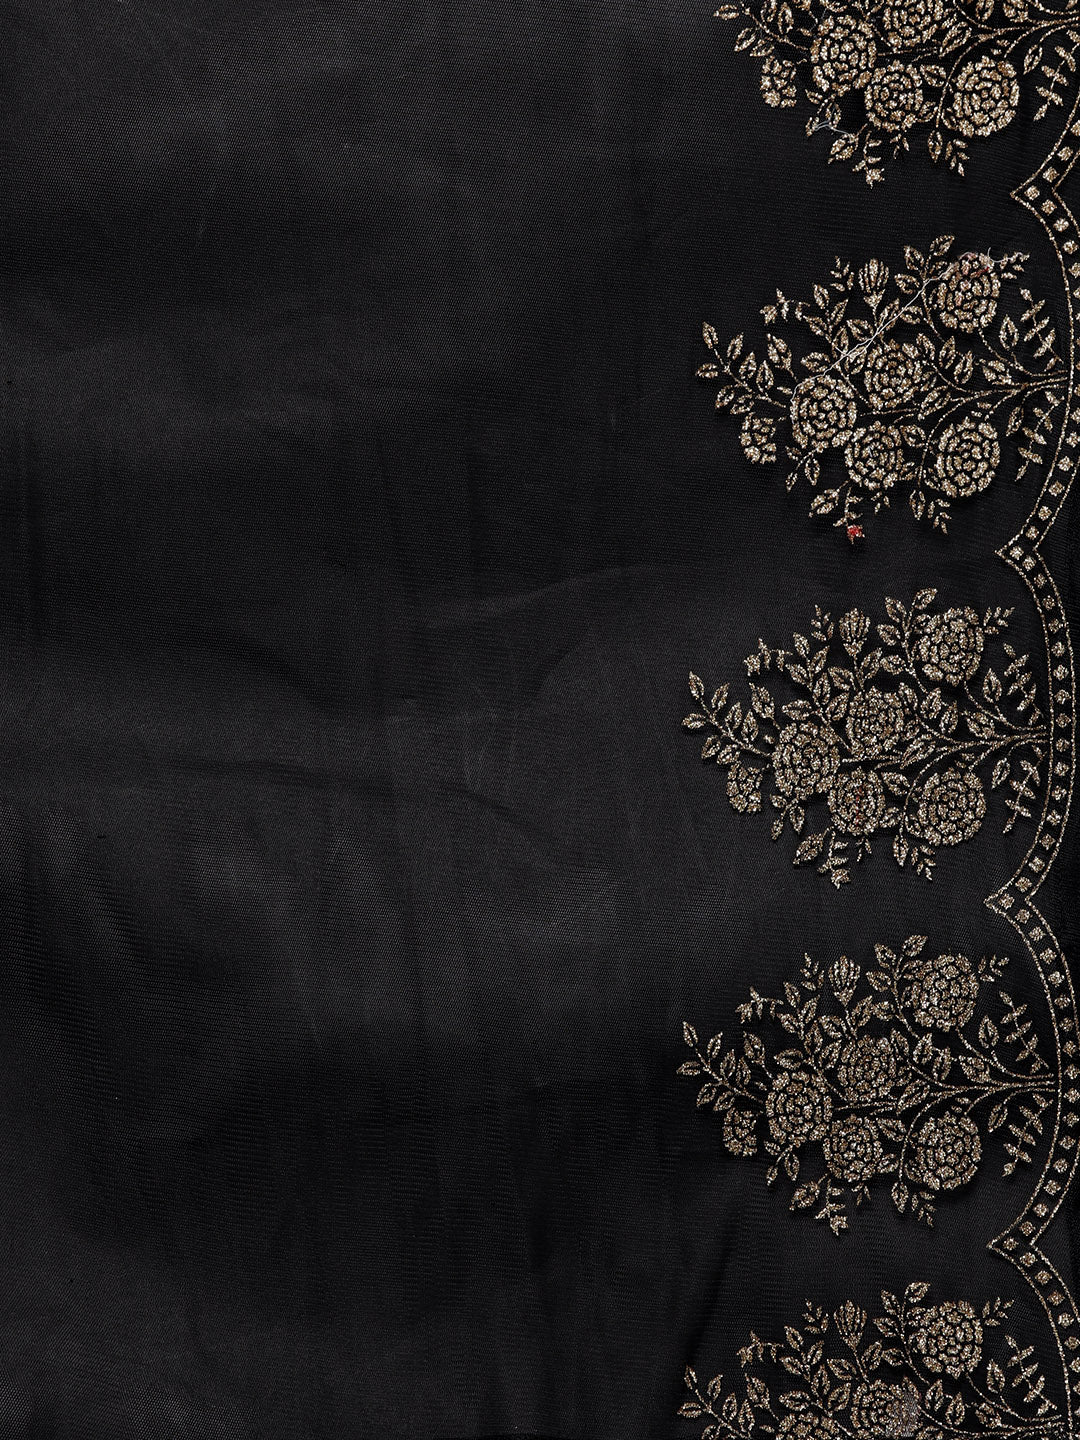 Women's Black Floral Printed Sharara set with Dupatta